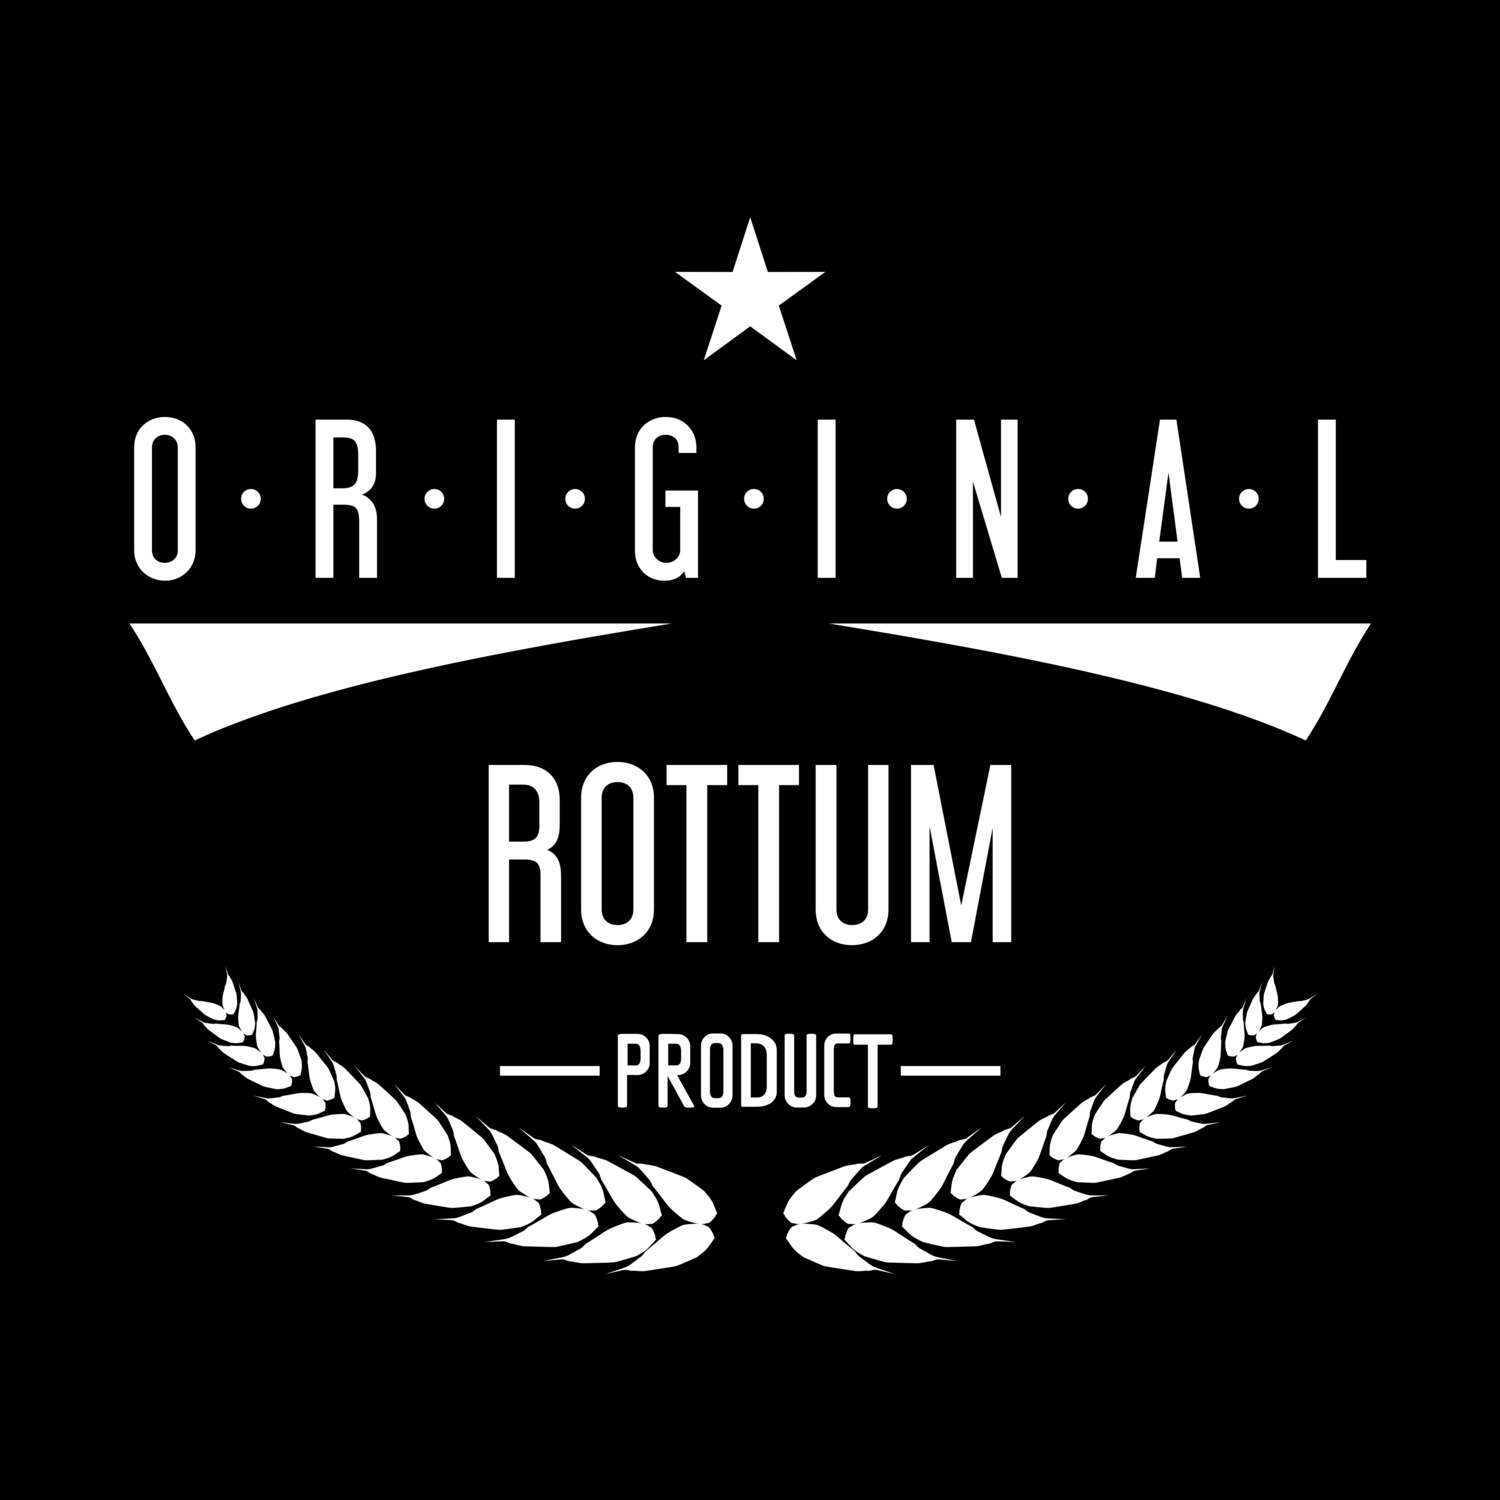 Rottum T-Shirt »Original Product«